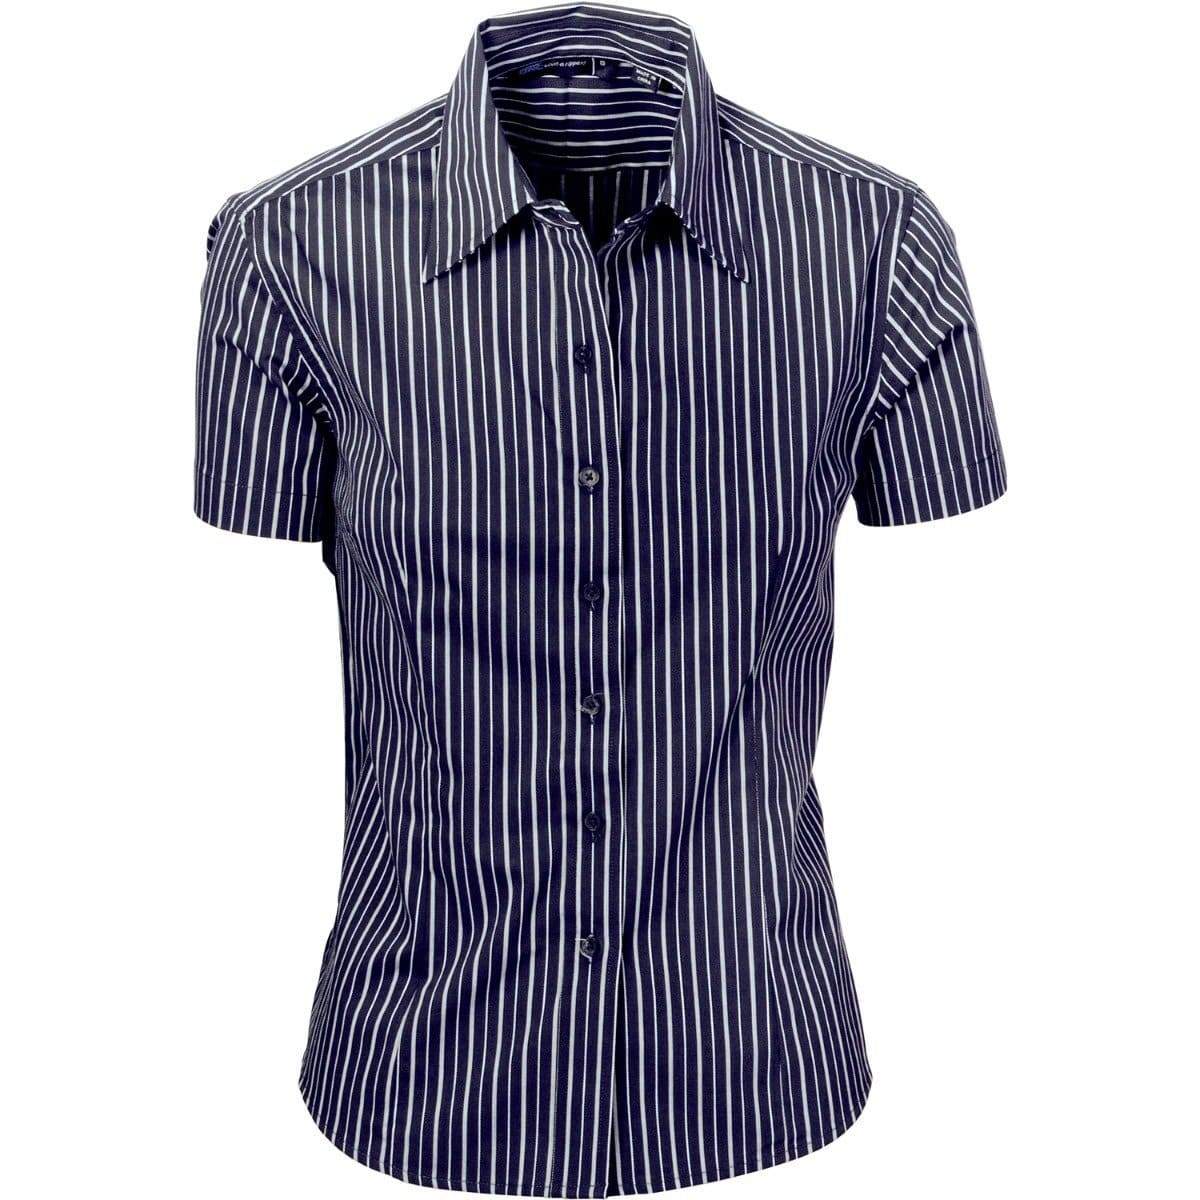 Dnc Workwear Ladies Stretch Yarn Dyed Contrast Stripe Short Sleeve Shirt - 4233 Corporate Wear DNC Workwear Navy/White 6 